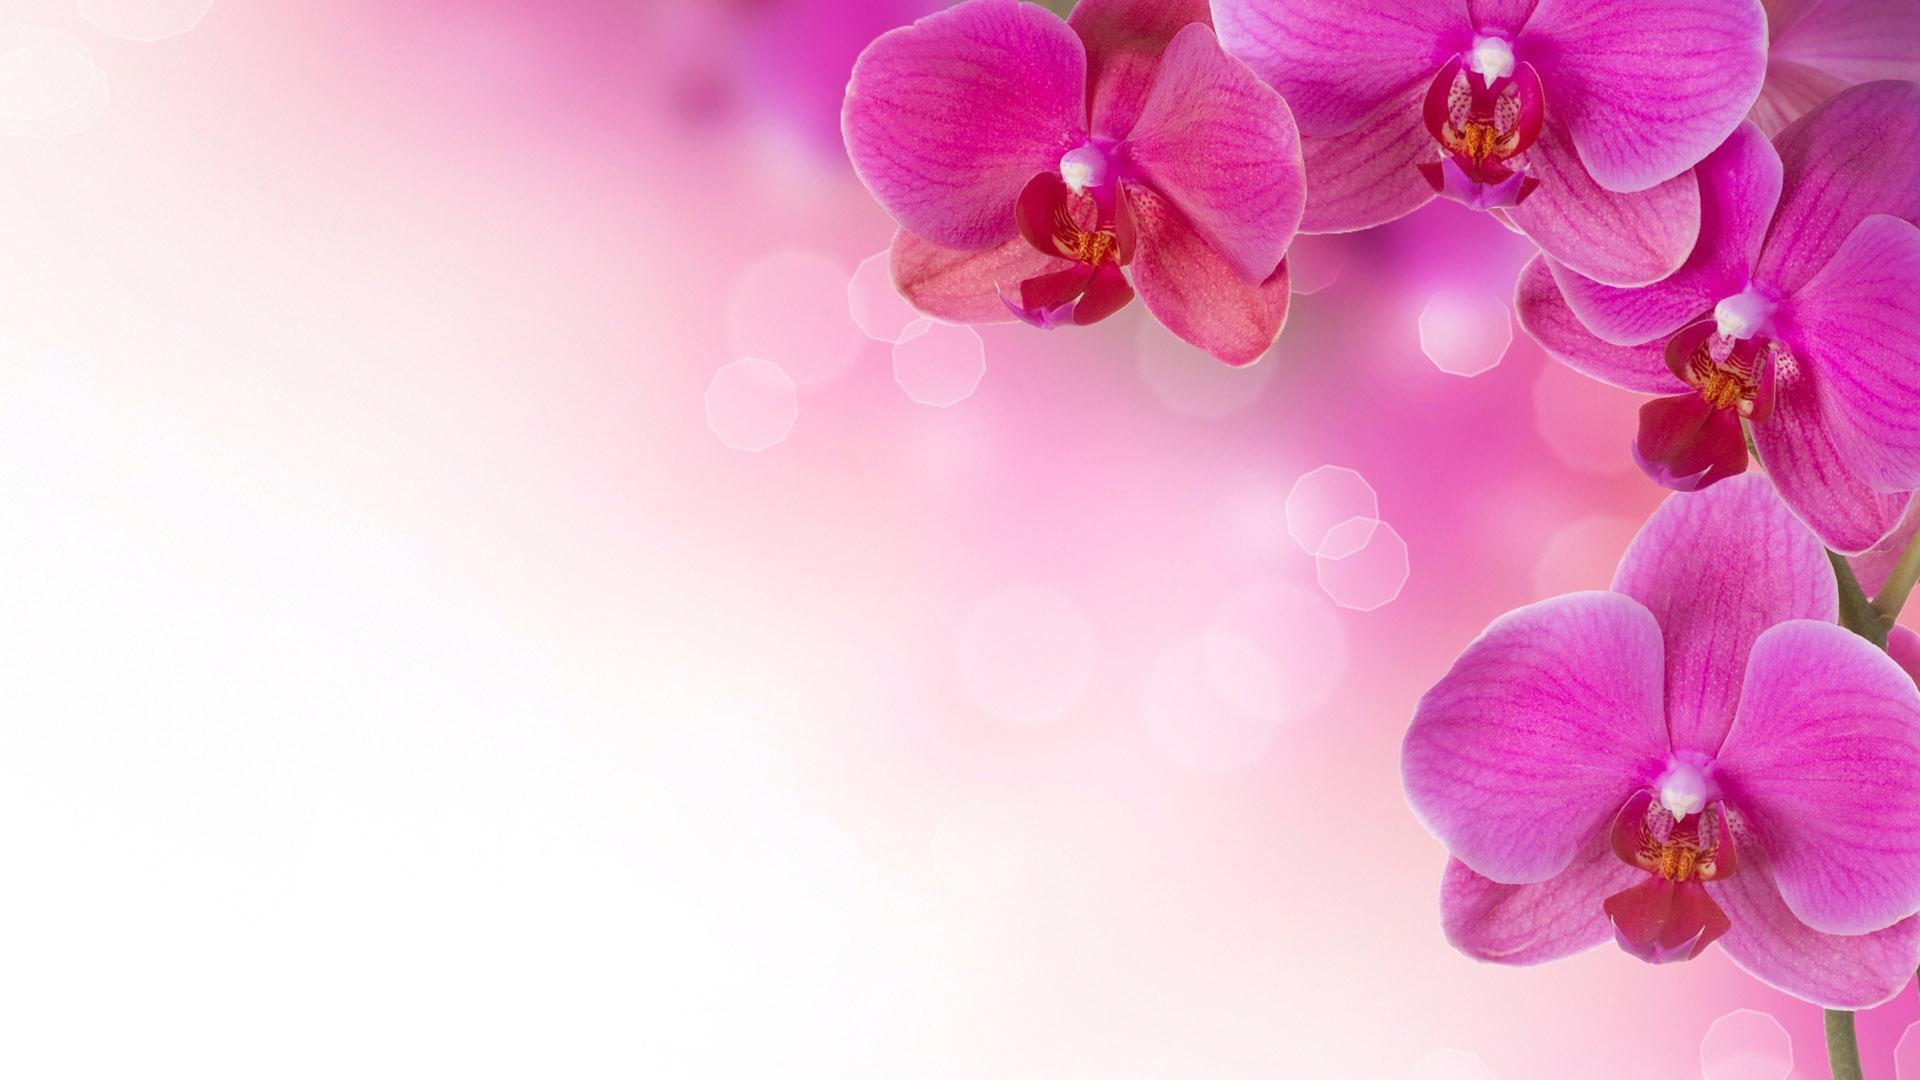 Wallpaper For > Pink Flower Wallpaper For Desktop Background